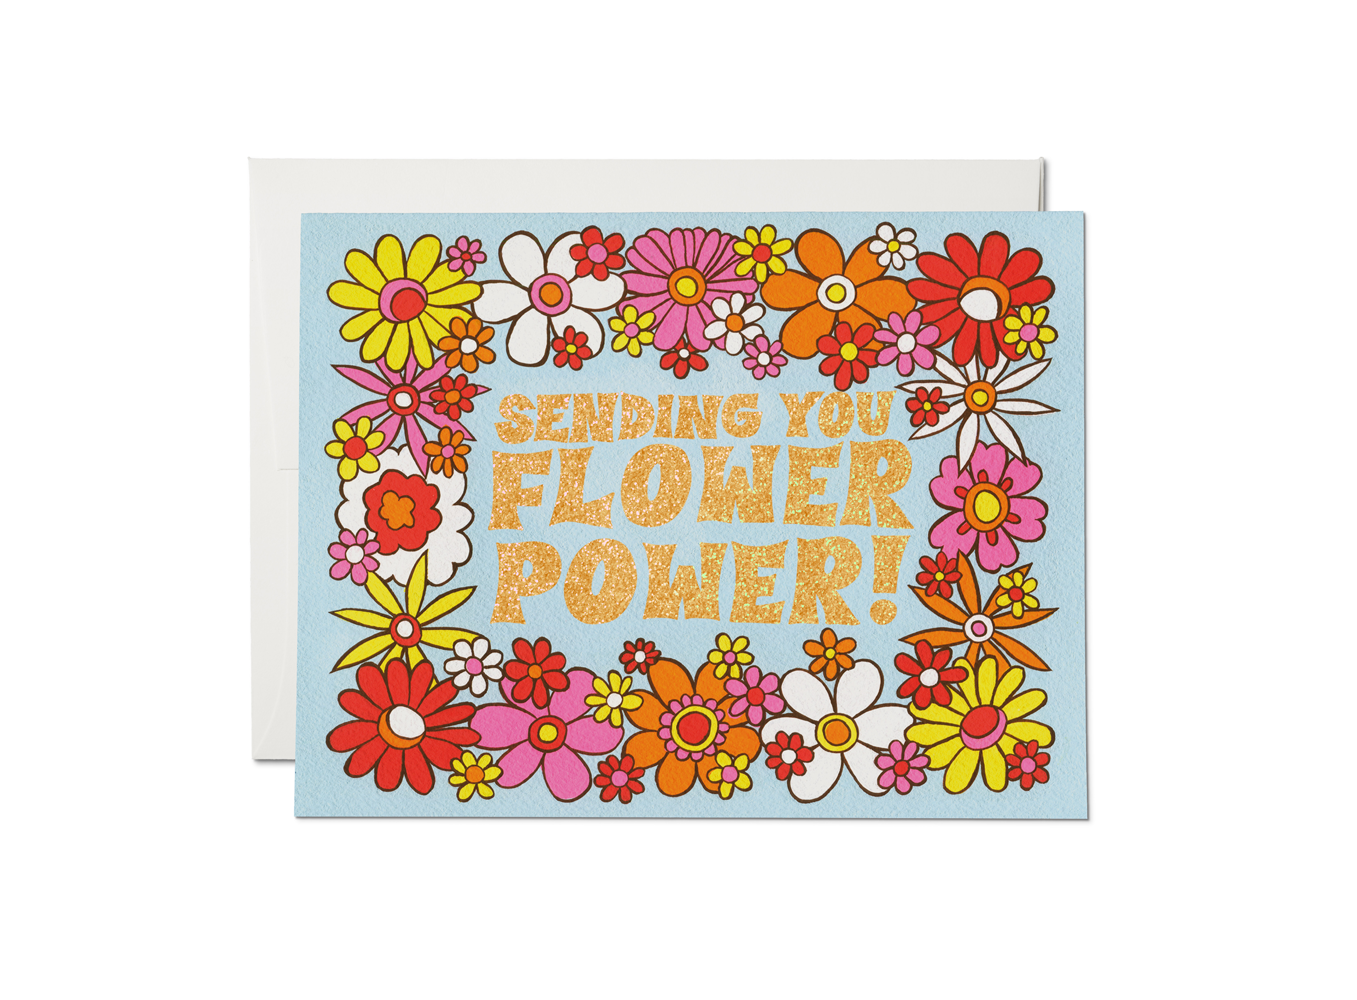 Flower Power encouragement greeting card